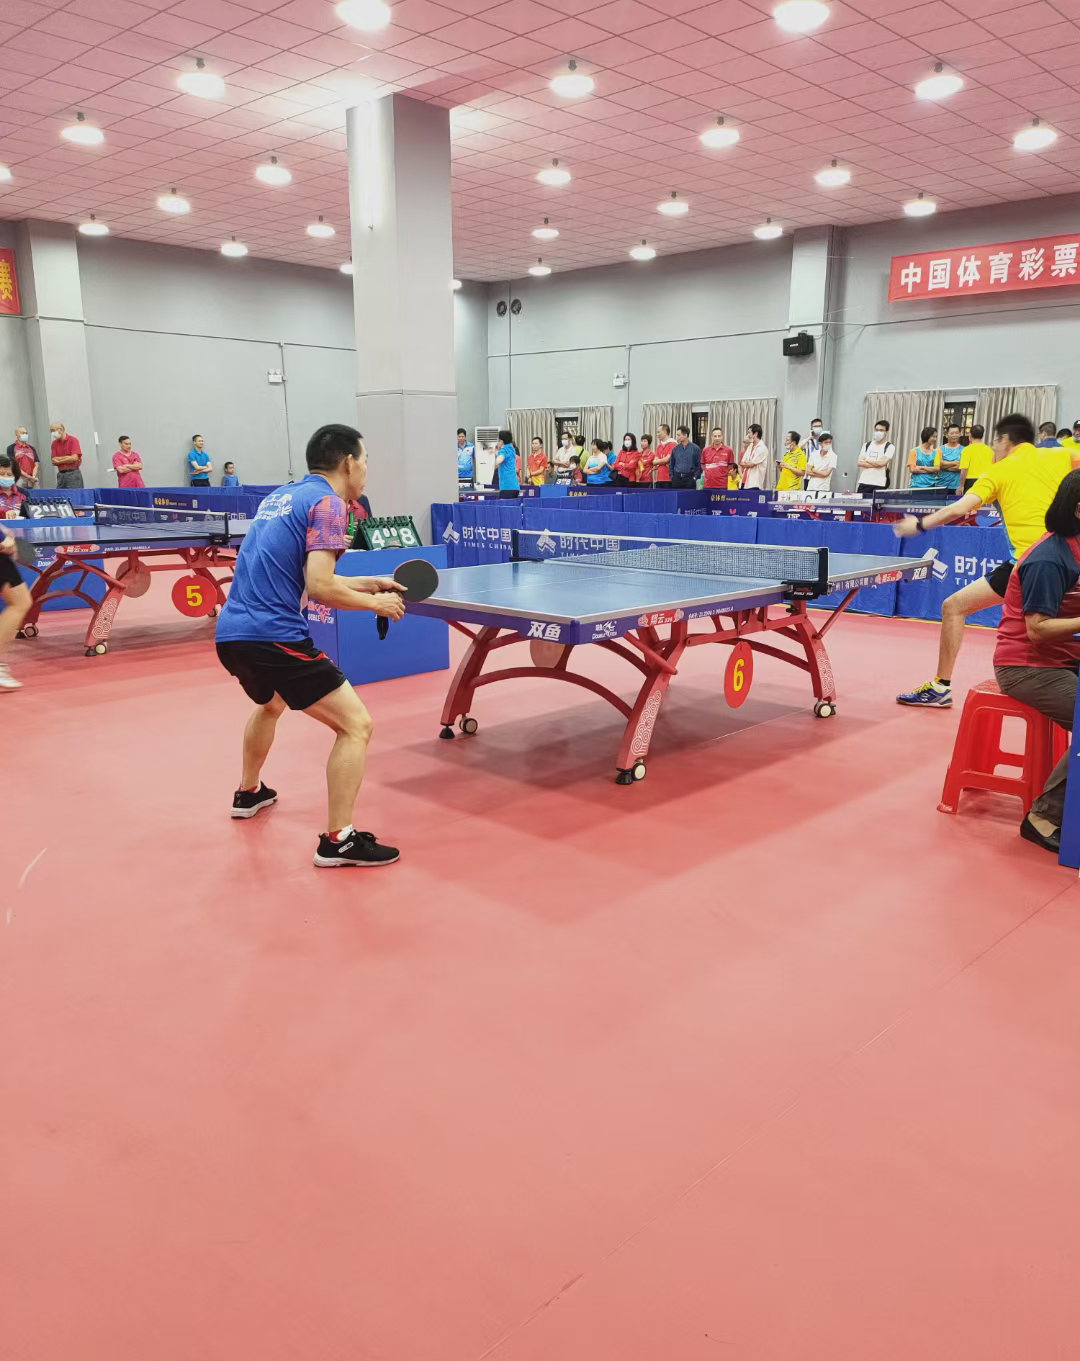 Ping Pong Match